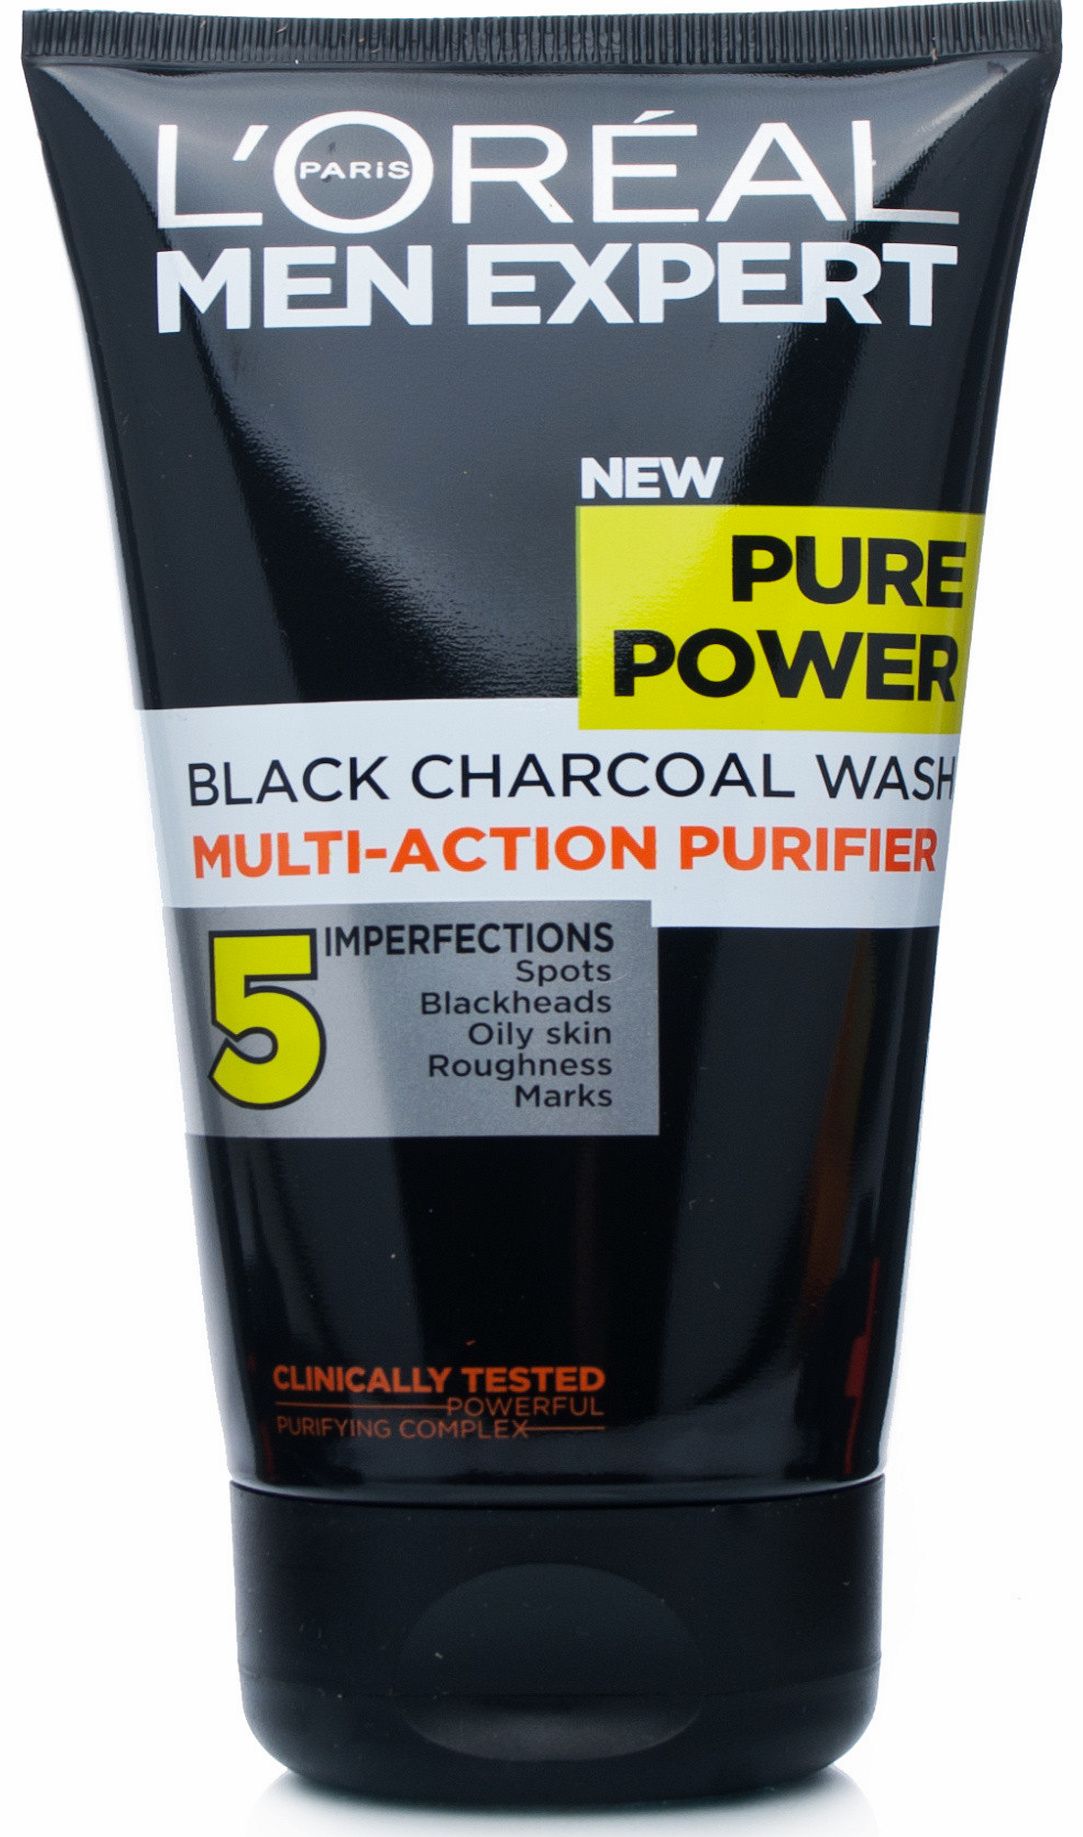 L'Oreal Men Expert Pure Power Charcoal Wash